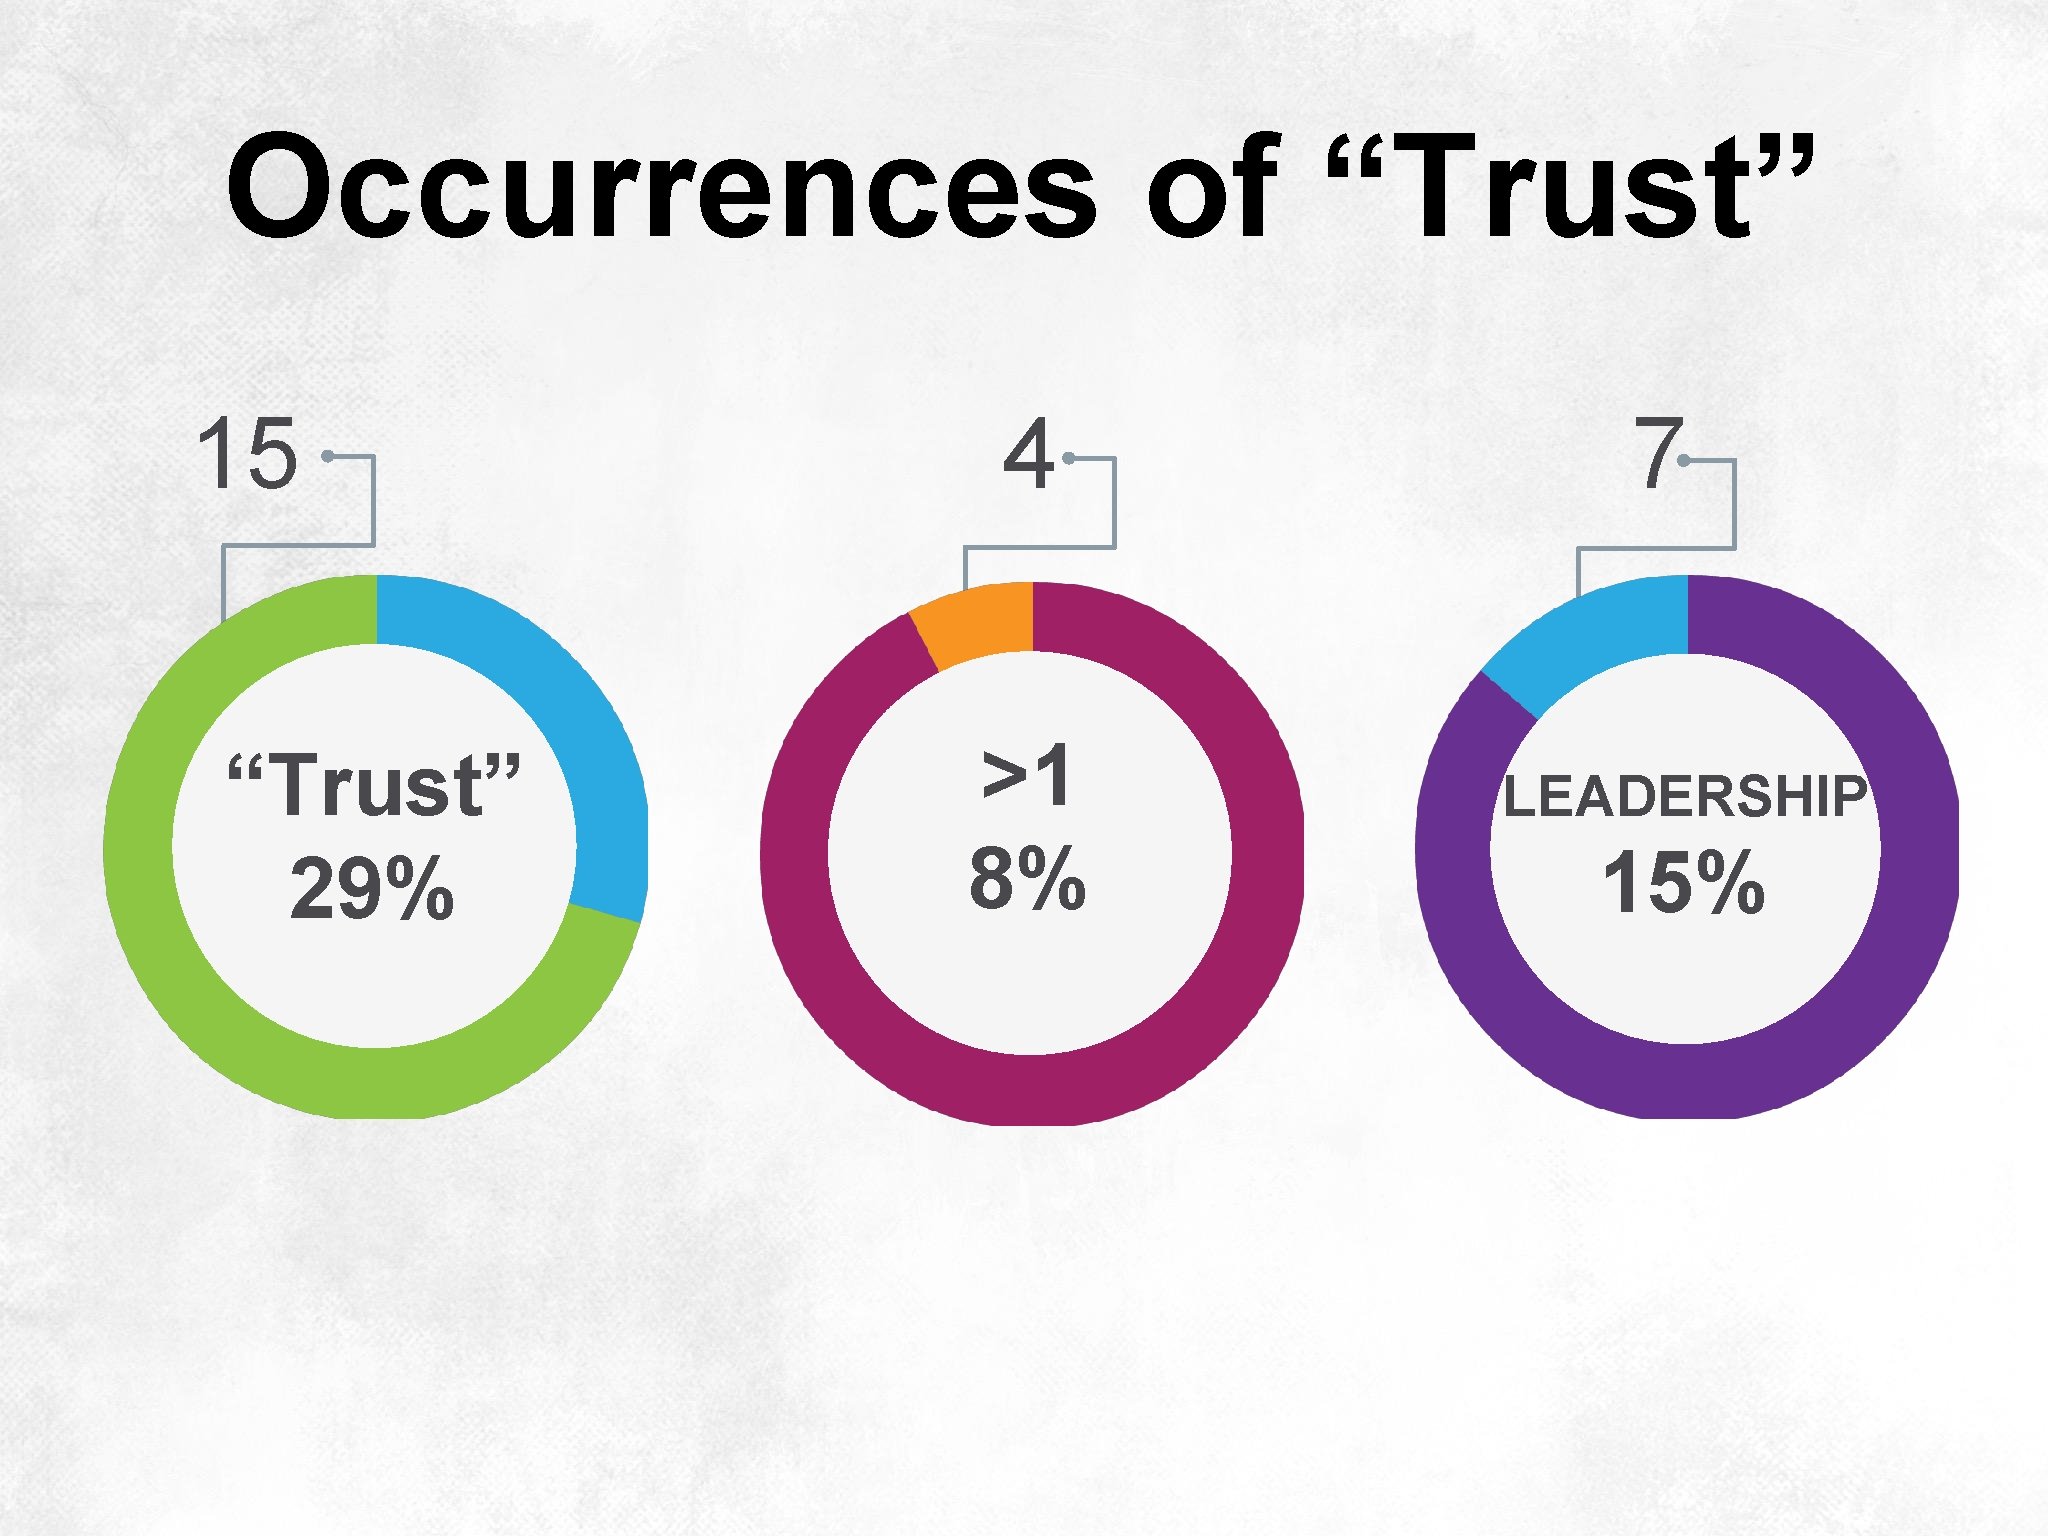 Occurrences of “Trust” 15 “Trust” 29% 4 >1 8% 7 LEADERSHIP 15% 